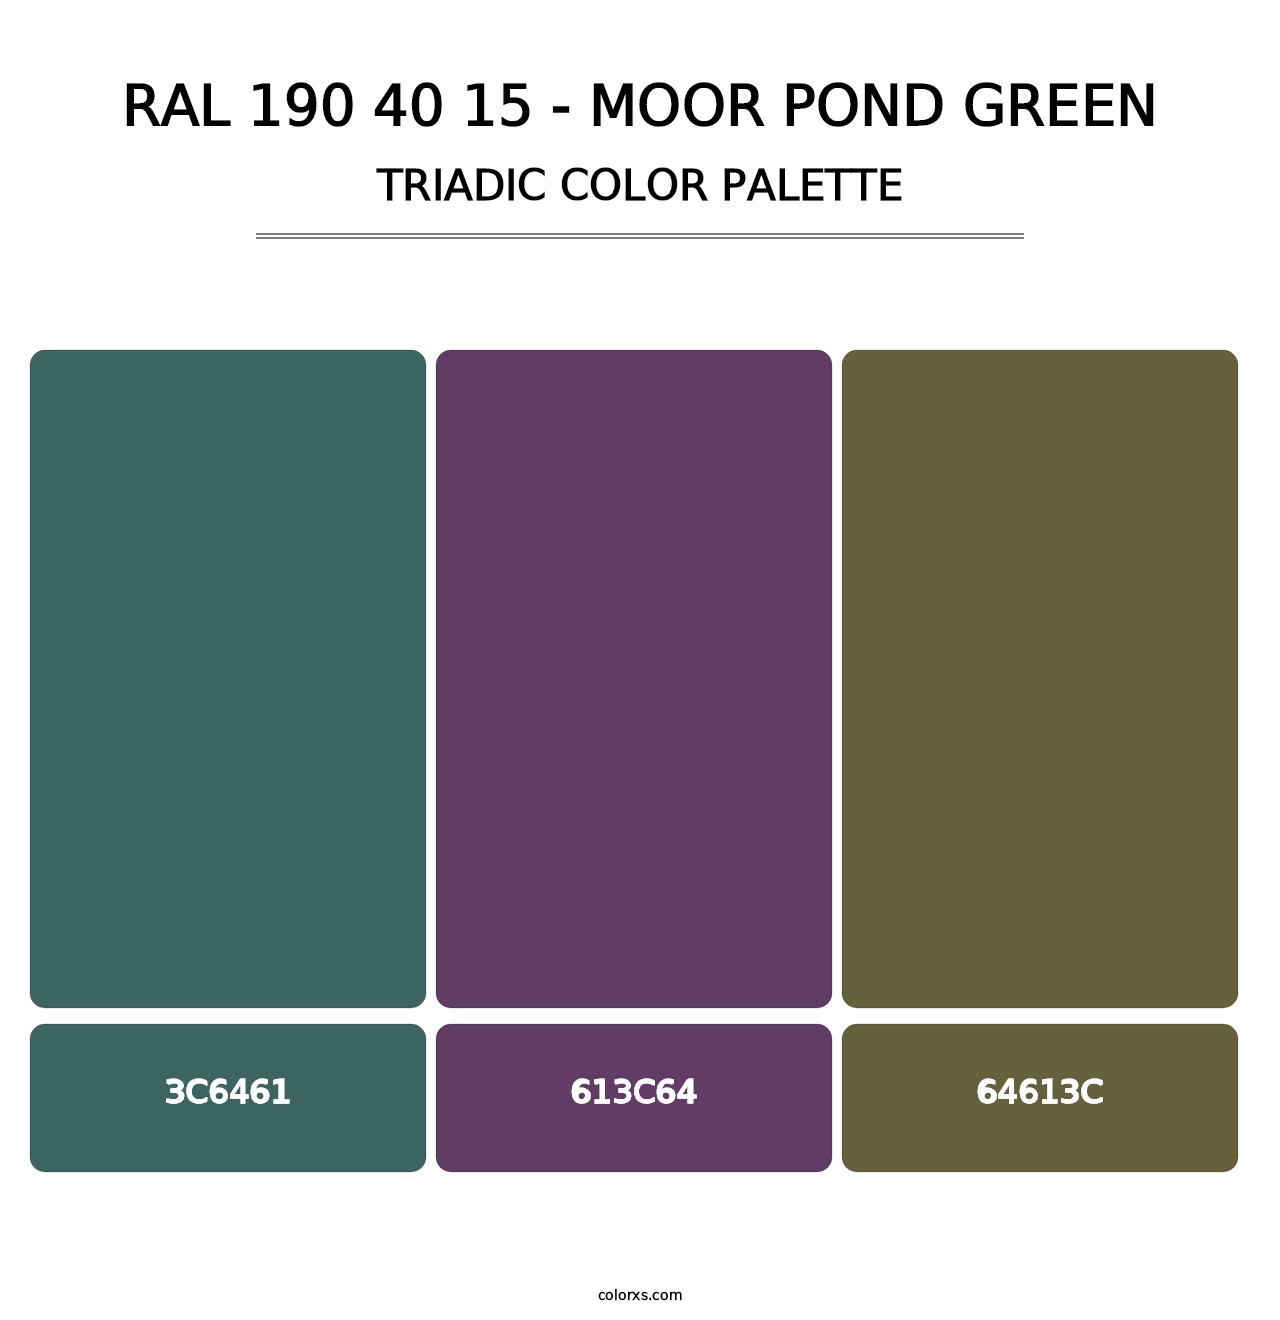 RAL 190 40 15 - Moor Pond Green - Triadic Color Palette